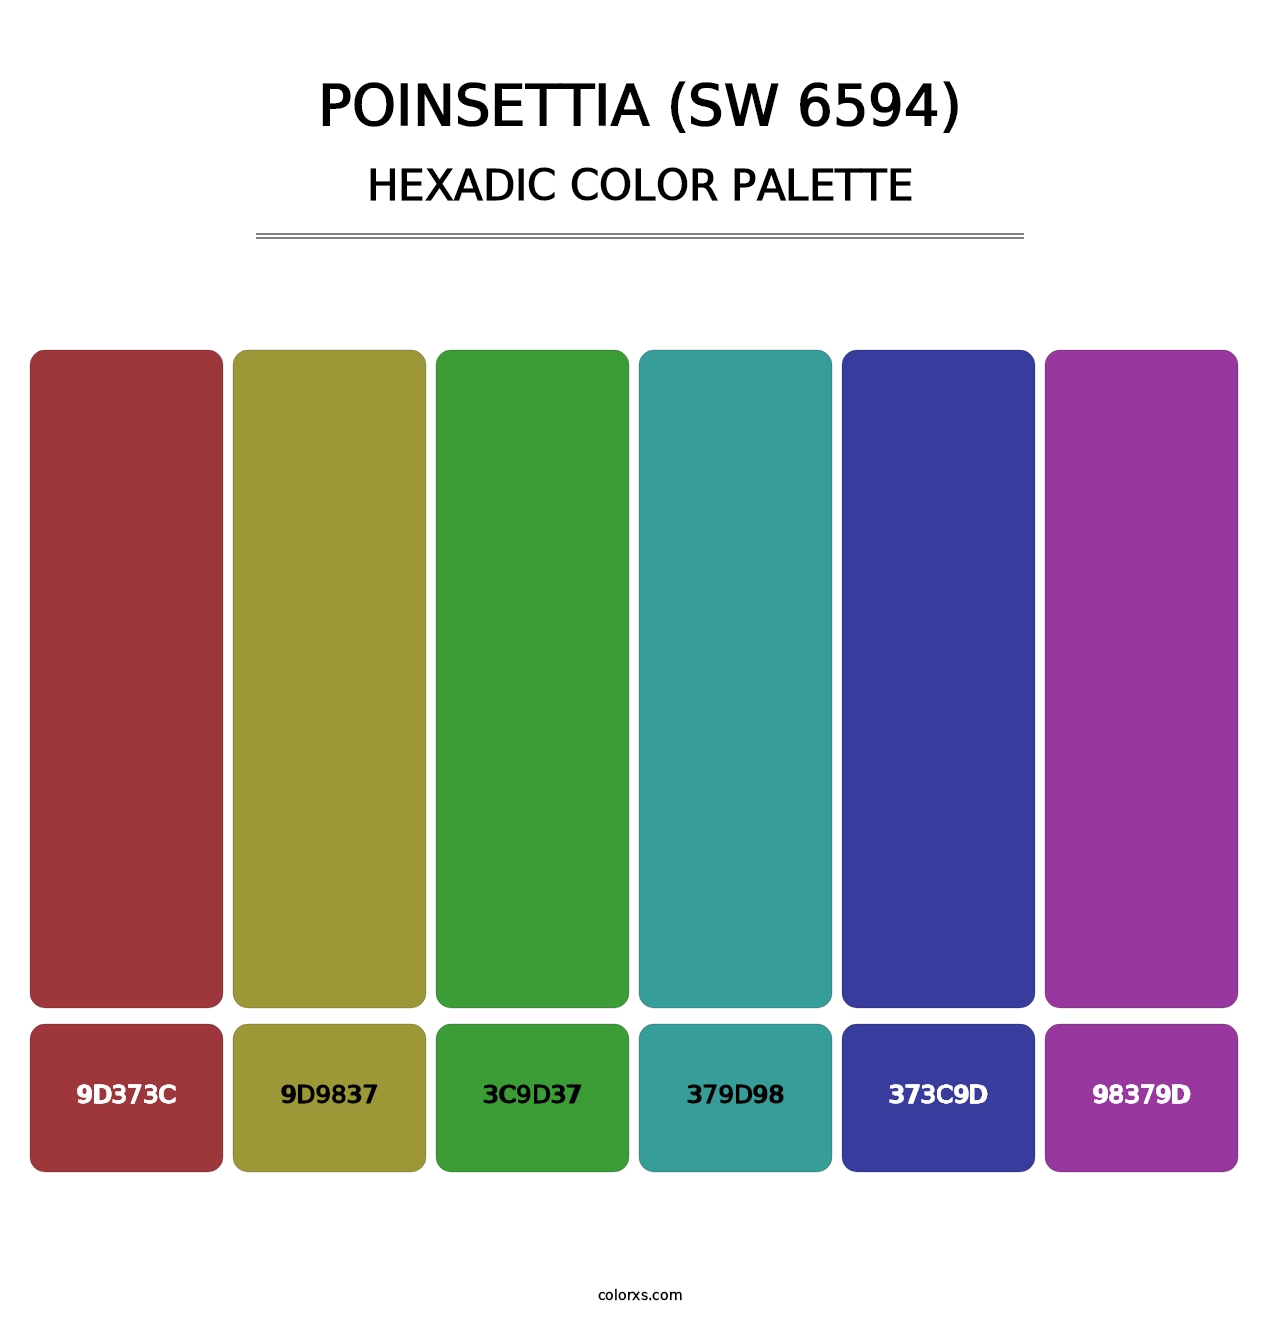 Poinsettia (SW 6594) - Hexadic Color Palette